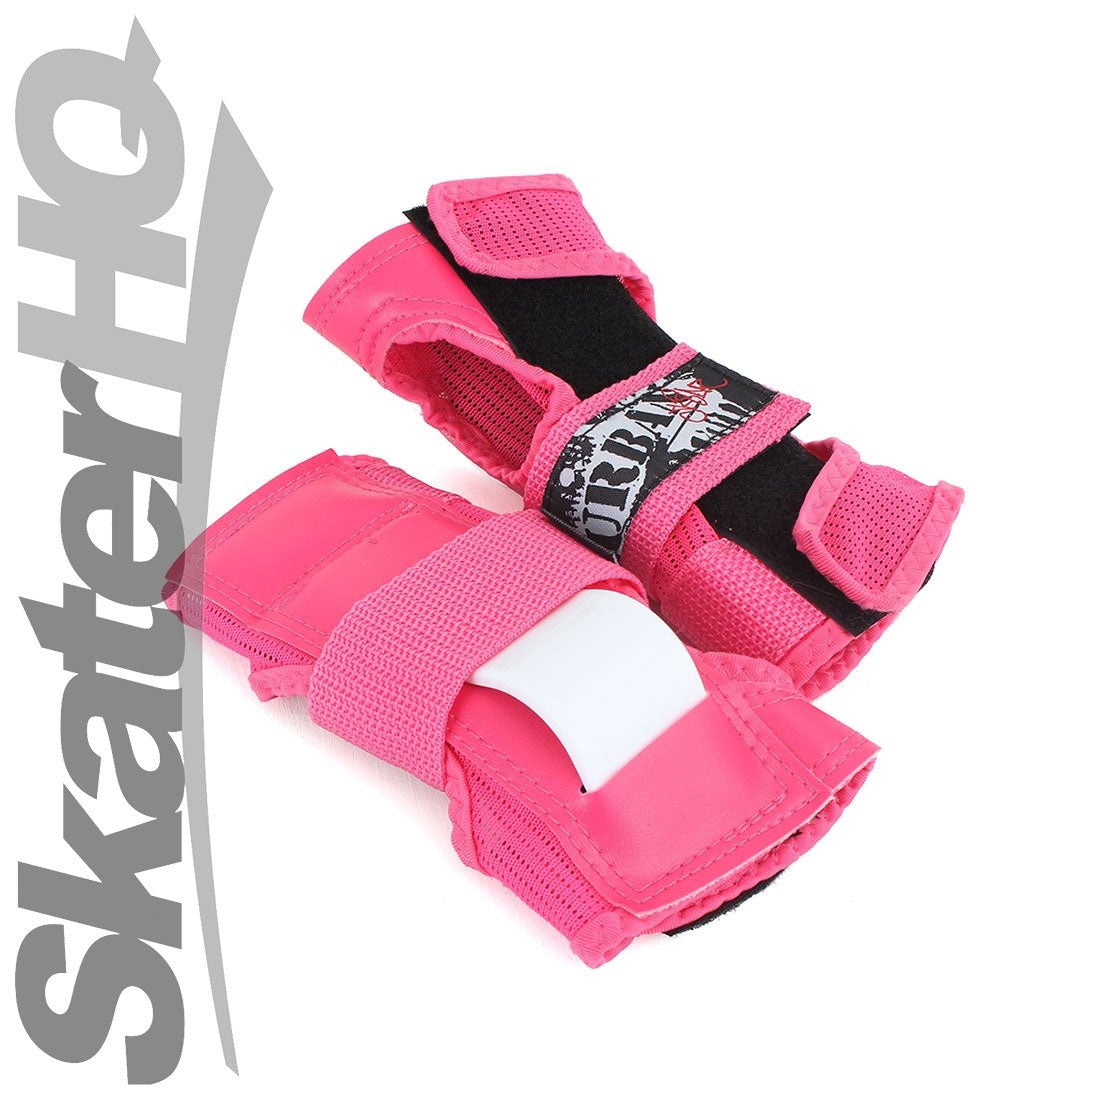 Urban Skater Wrist Guard - Pink - Medium Protective Gear